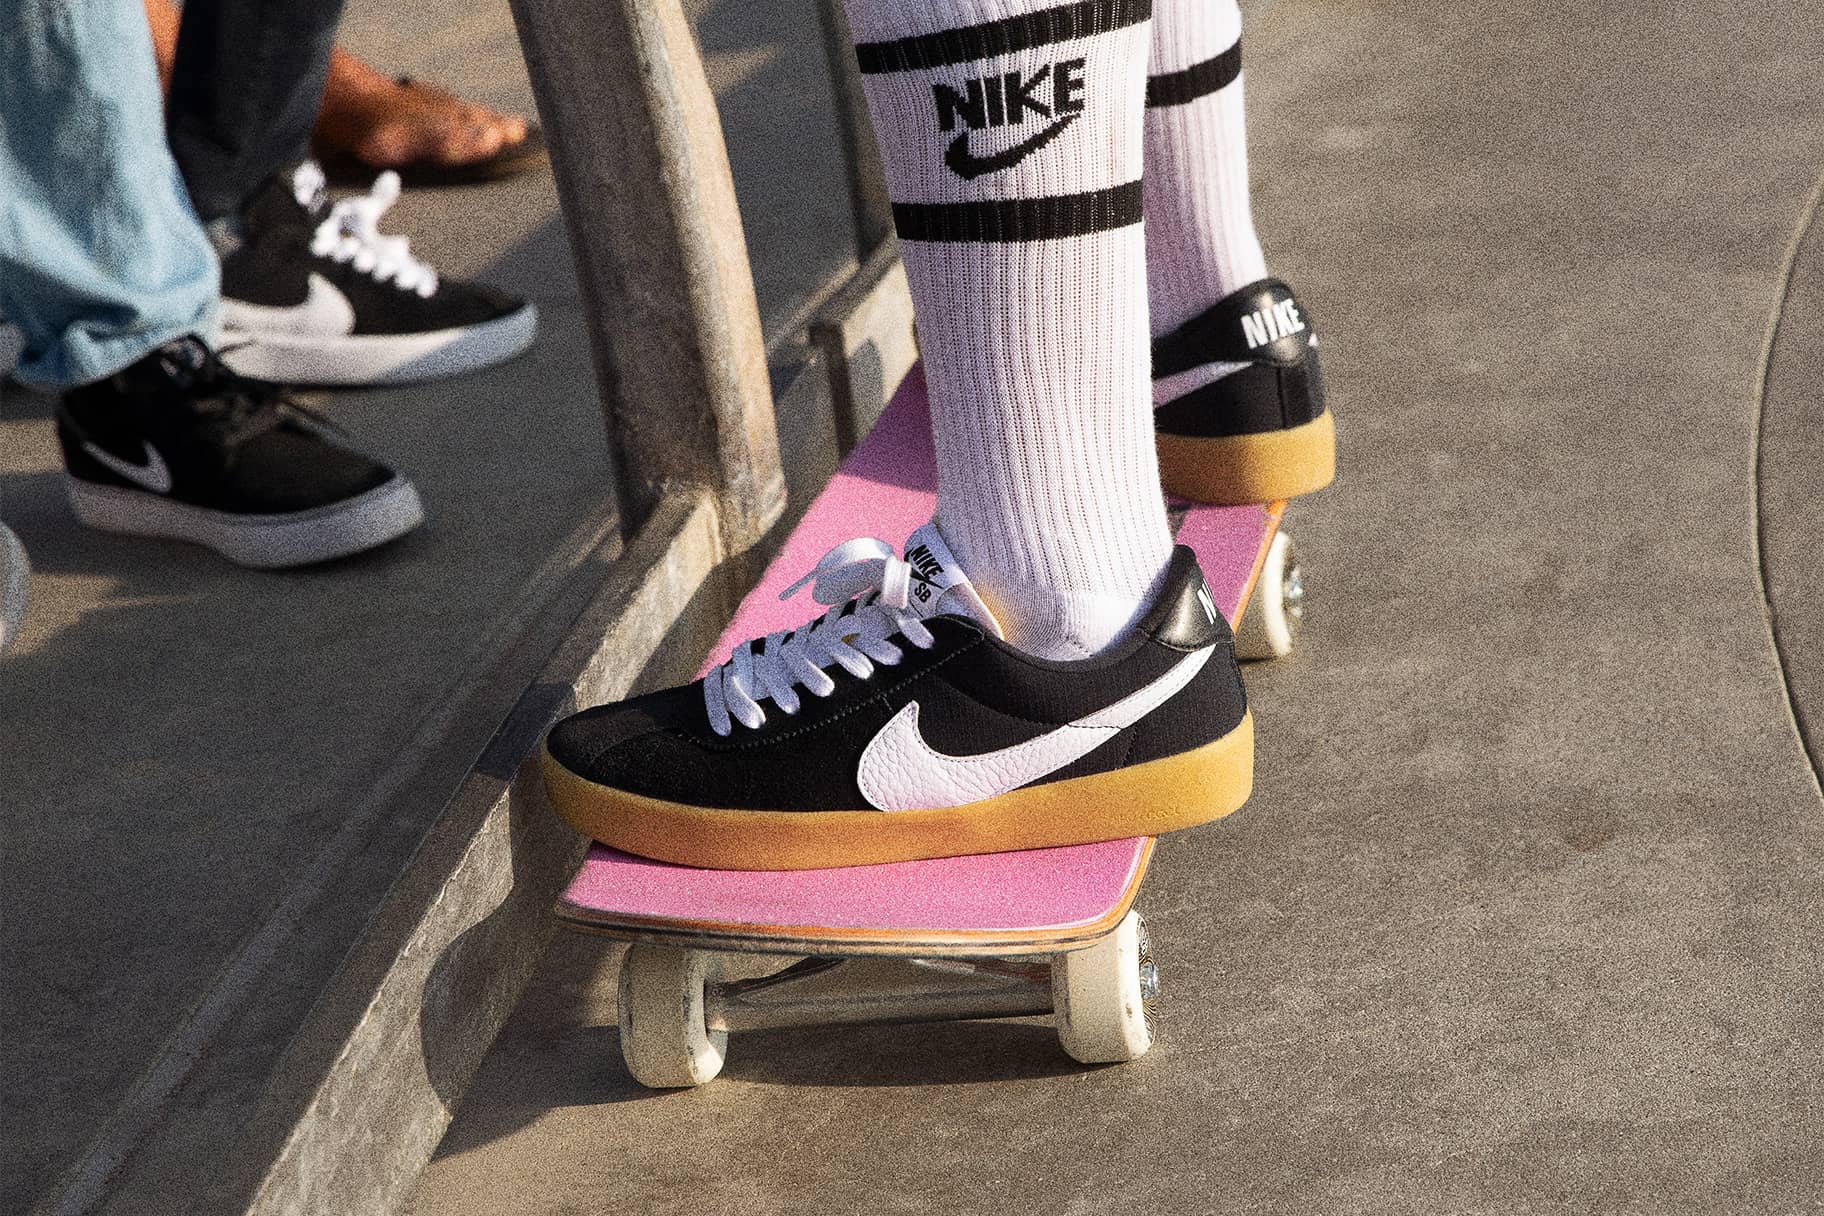 Les millors sabatilles de Nike Skateboarding d'alt rendiment